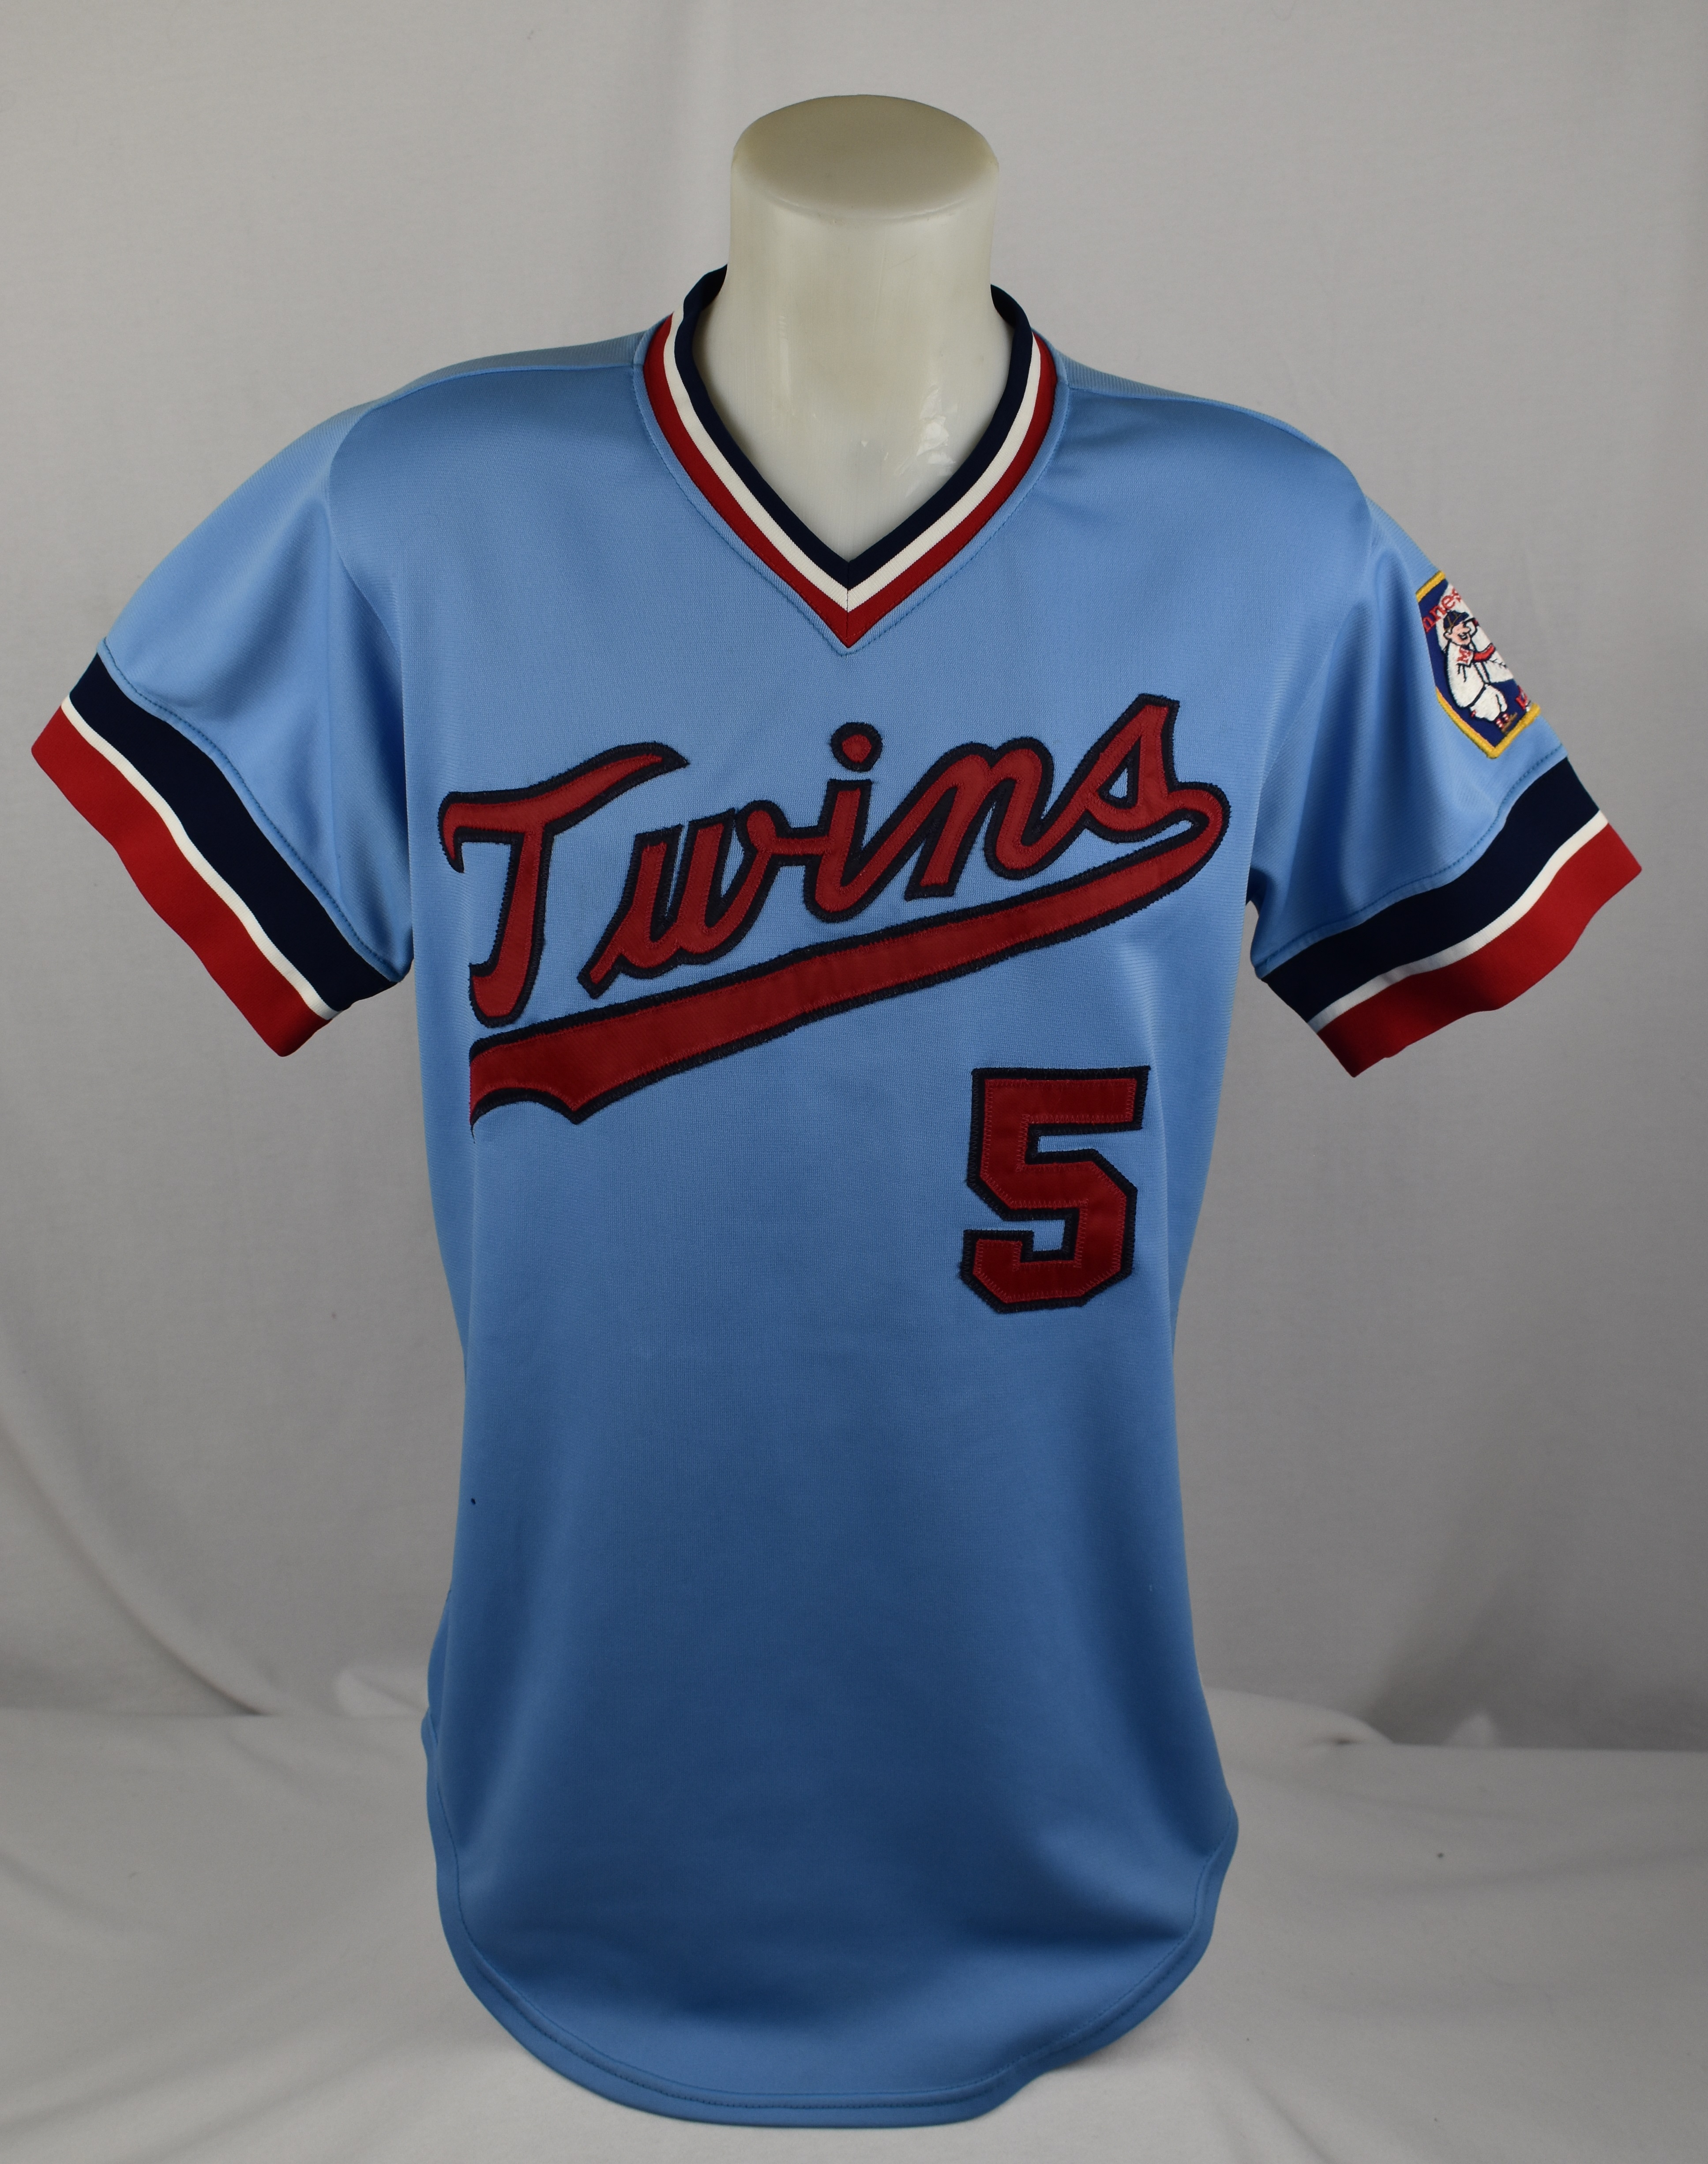 Vintage 1970s Minnesota Twins Baseball Jersey